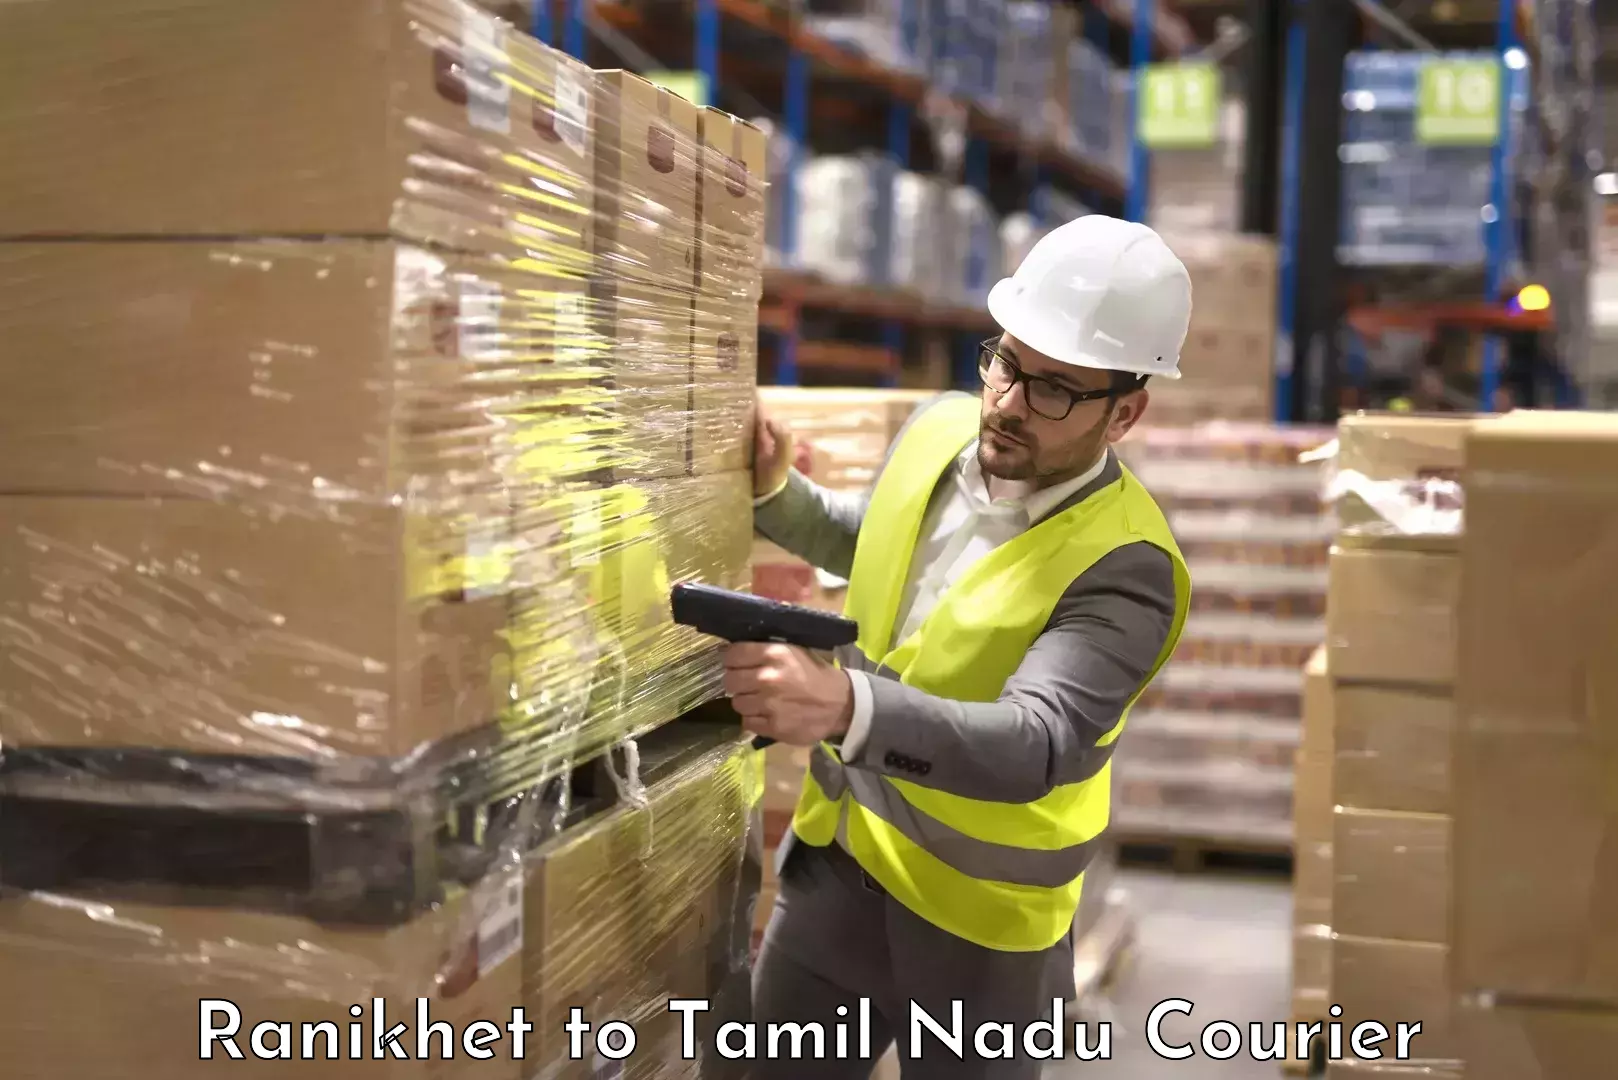 Luggage delivery app Ranikhet to Tamil Nadu